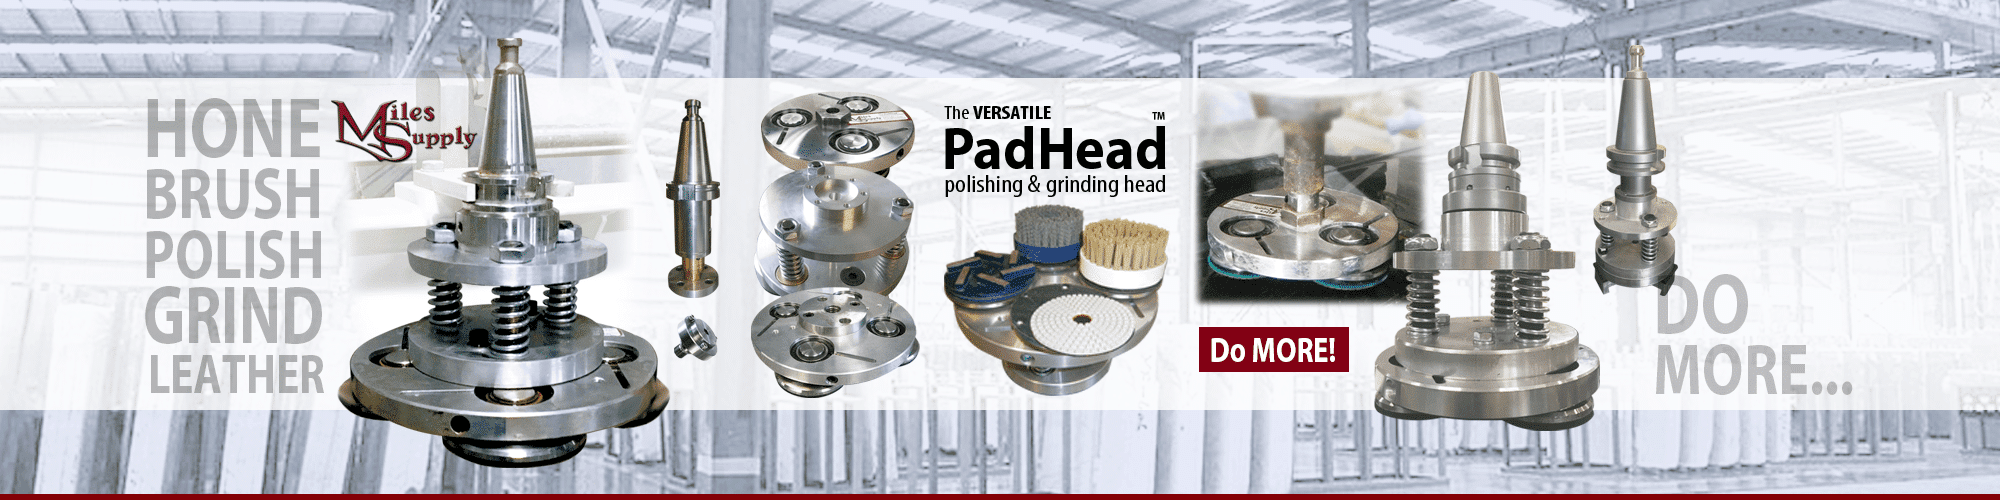 Miles Supply's patented PadHead polishing and grinding head